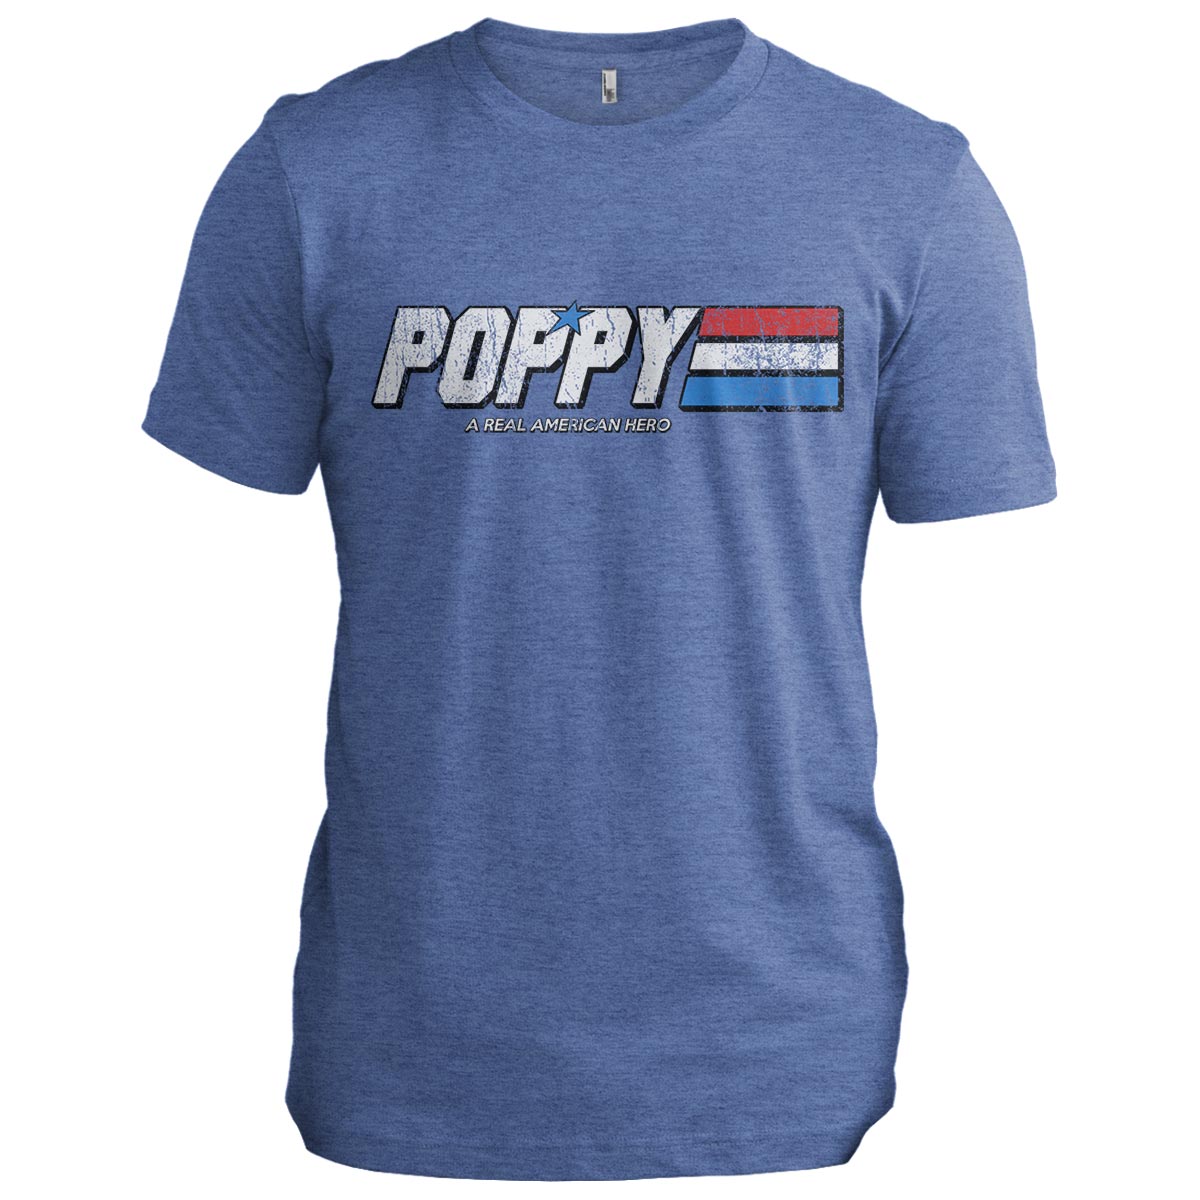 POPPY: Real American Hero